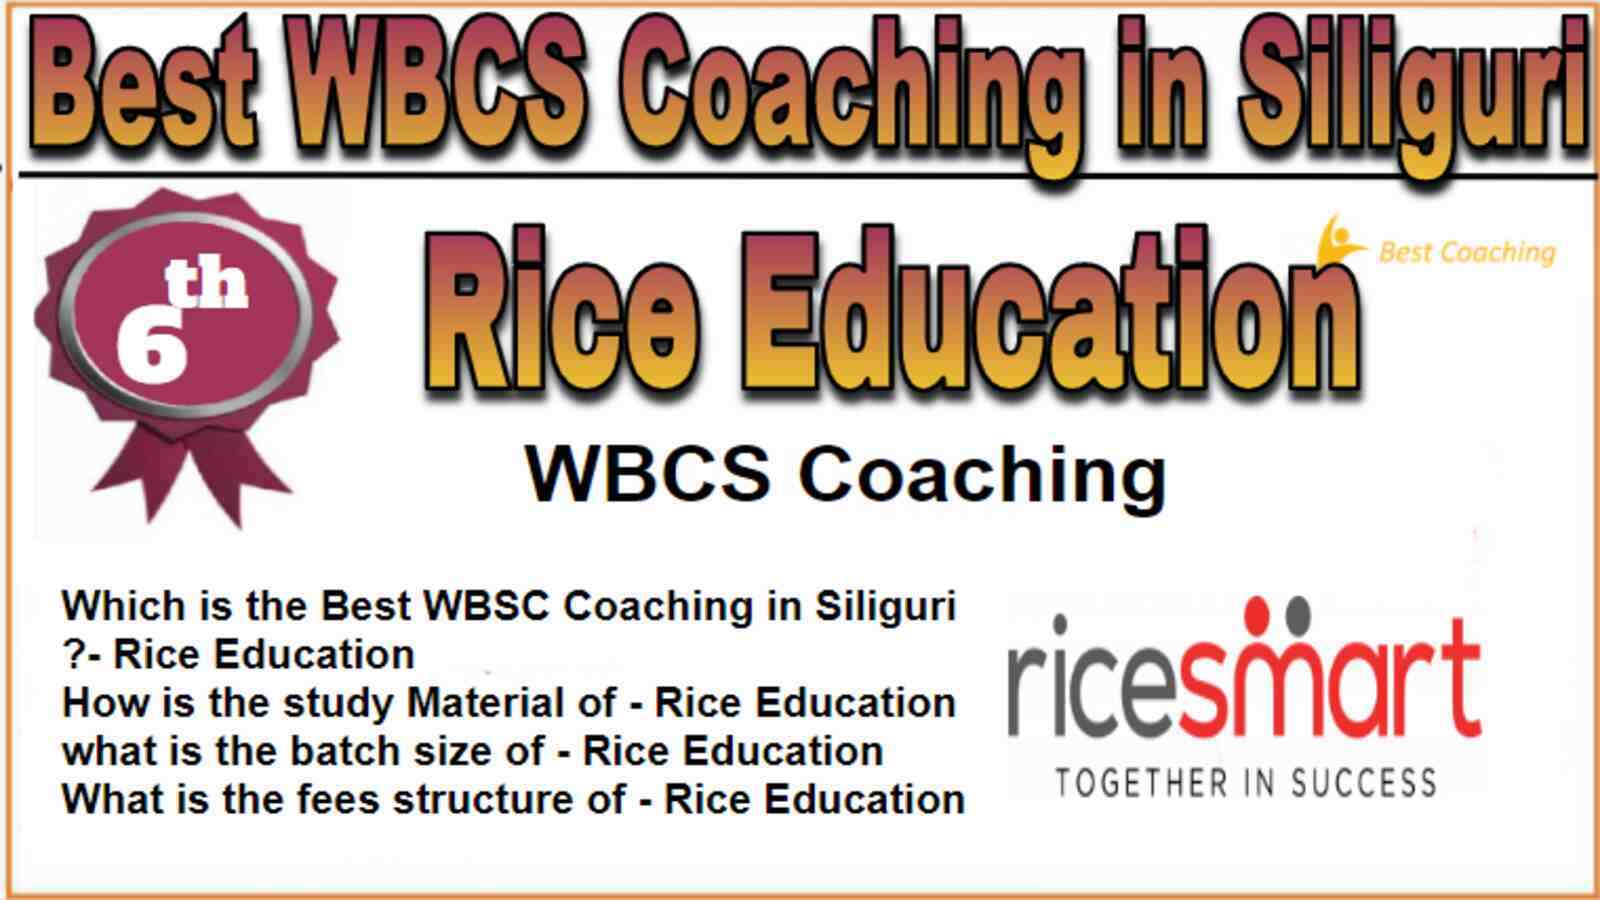 Rank 6 Best WBCS Coaching in Siliguri